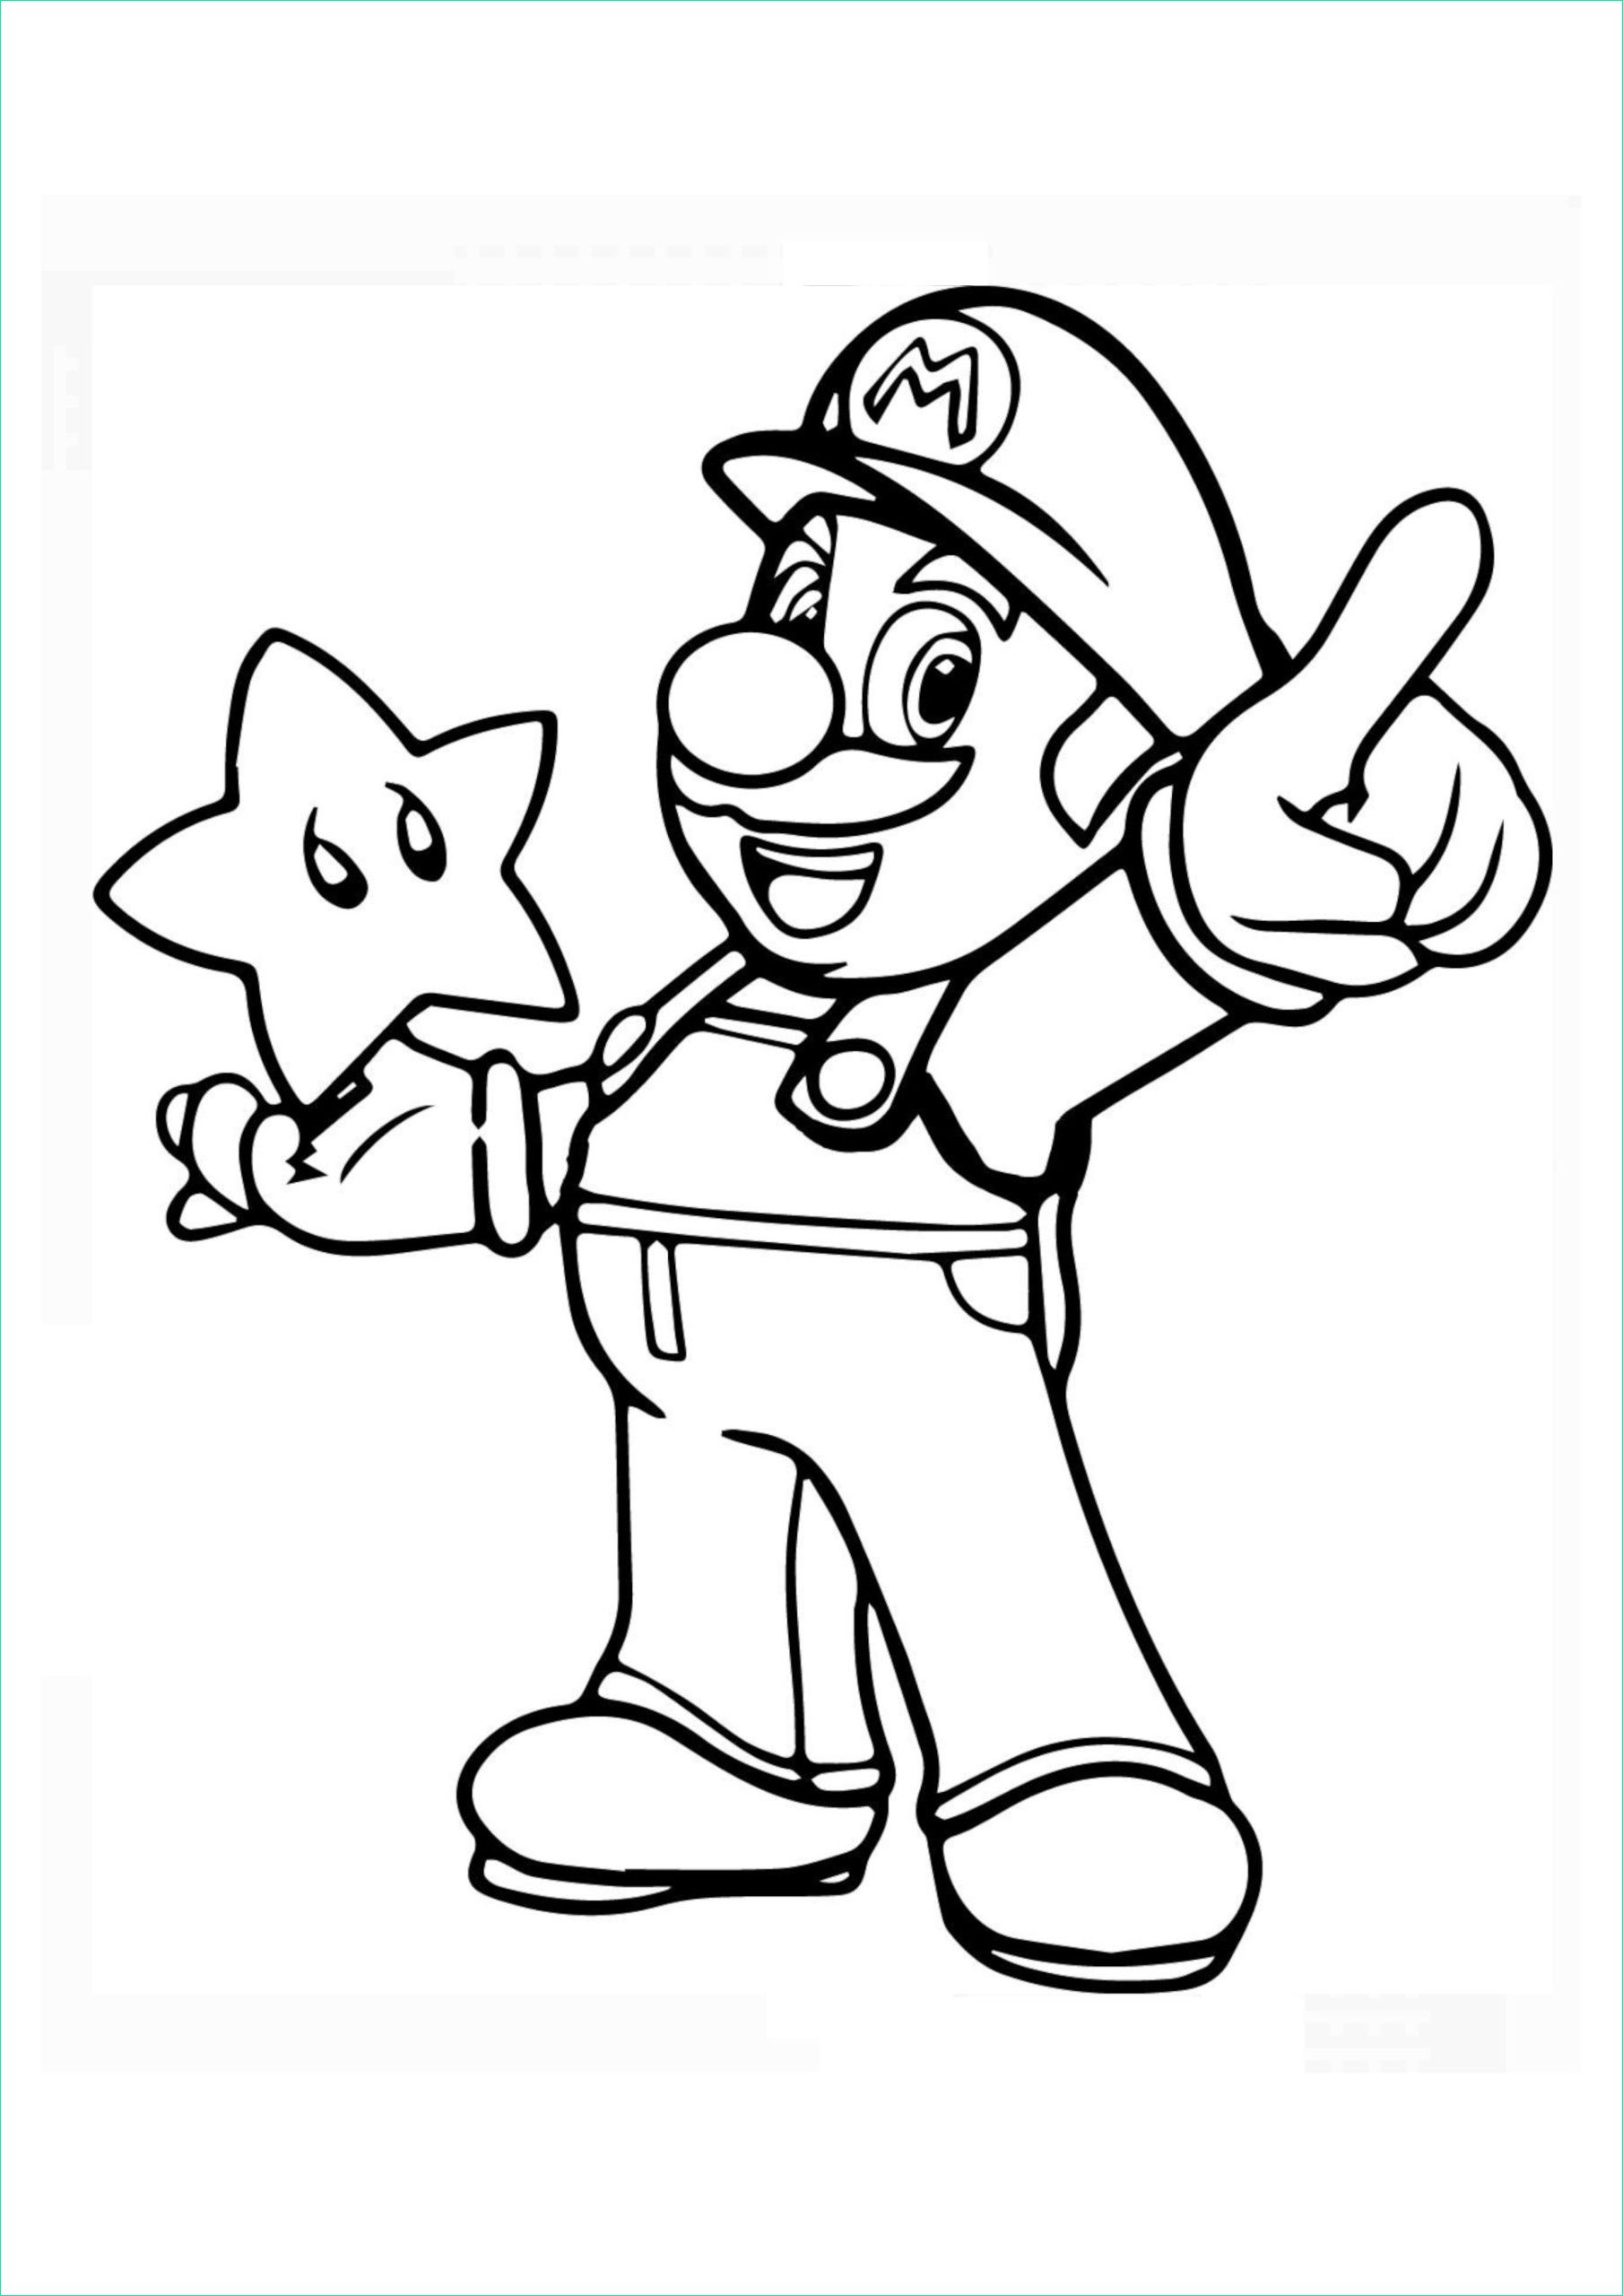 Dessin À Imprimer Mario Inspirant Collection Coloriage Mario - Coloriage destiné Dessin Mario A Imprimer